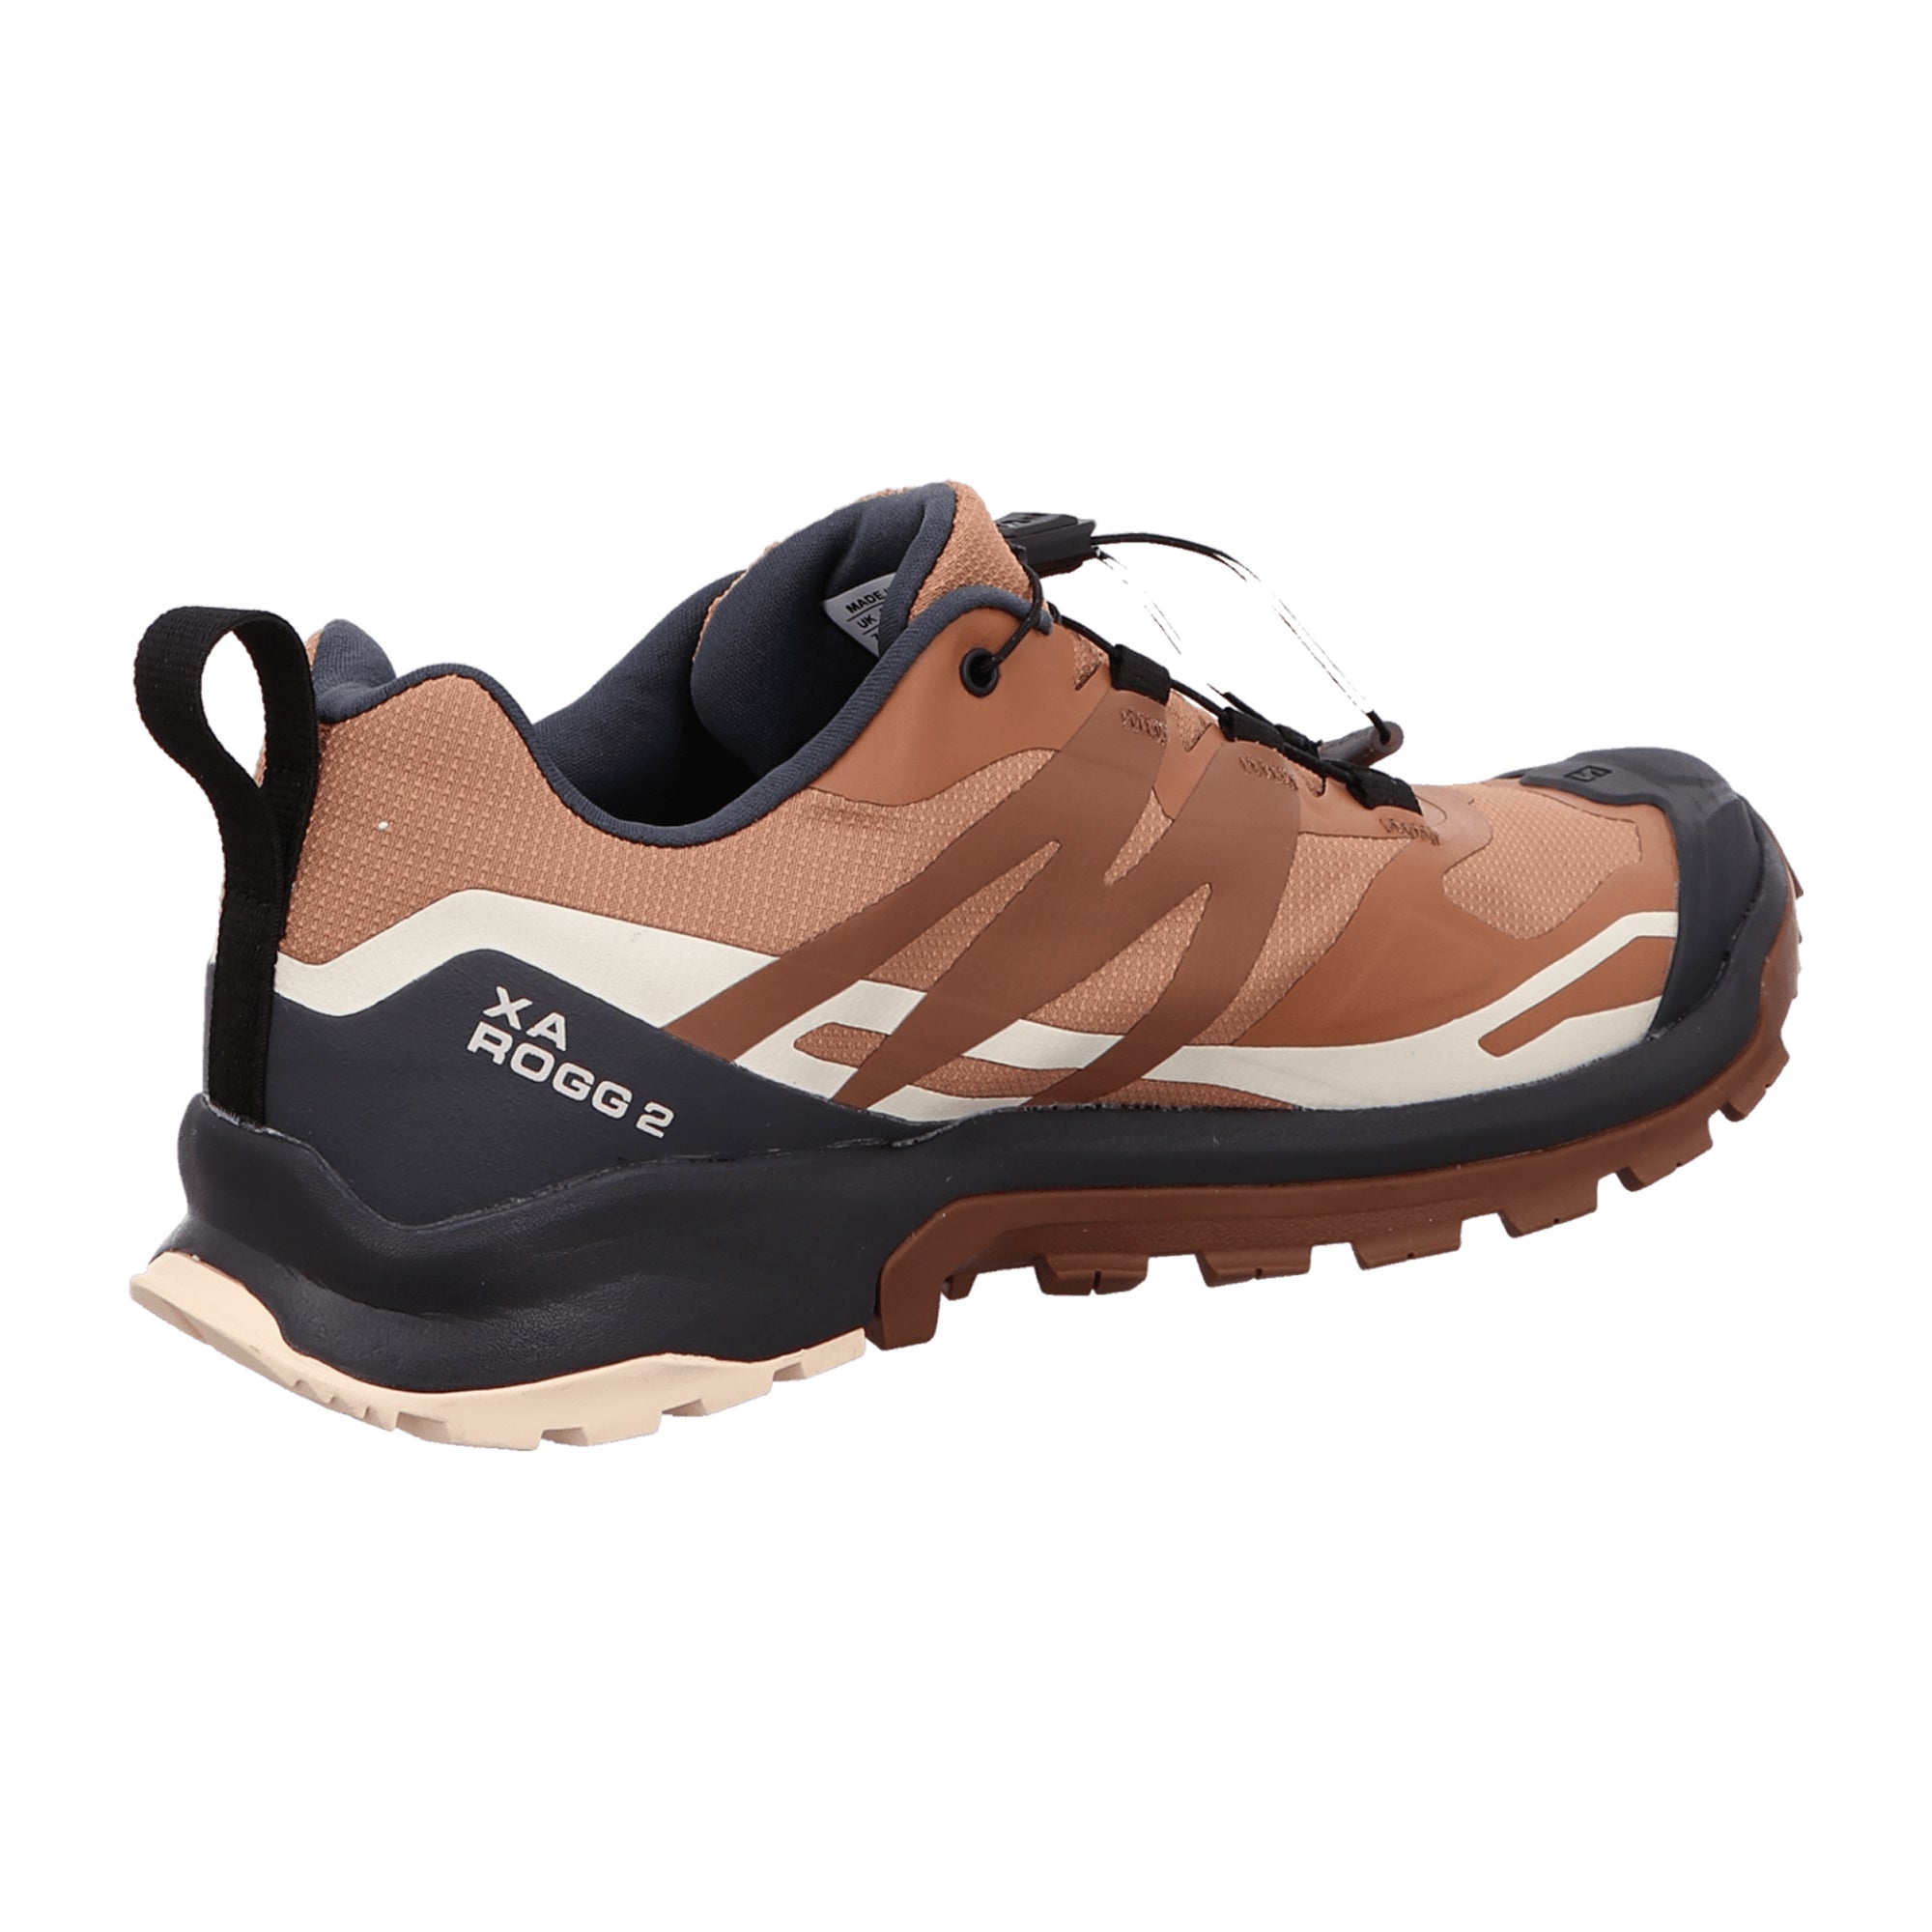 Salomon XA ROGG 2 GTX W for women, brown, shoes